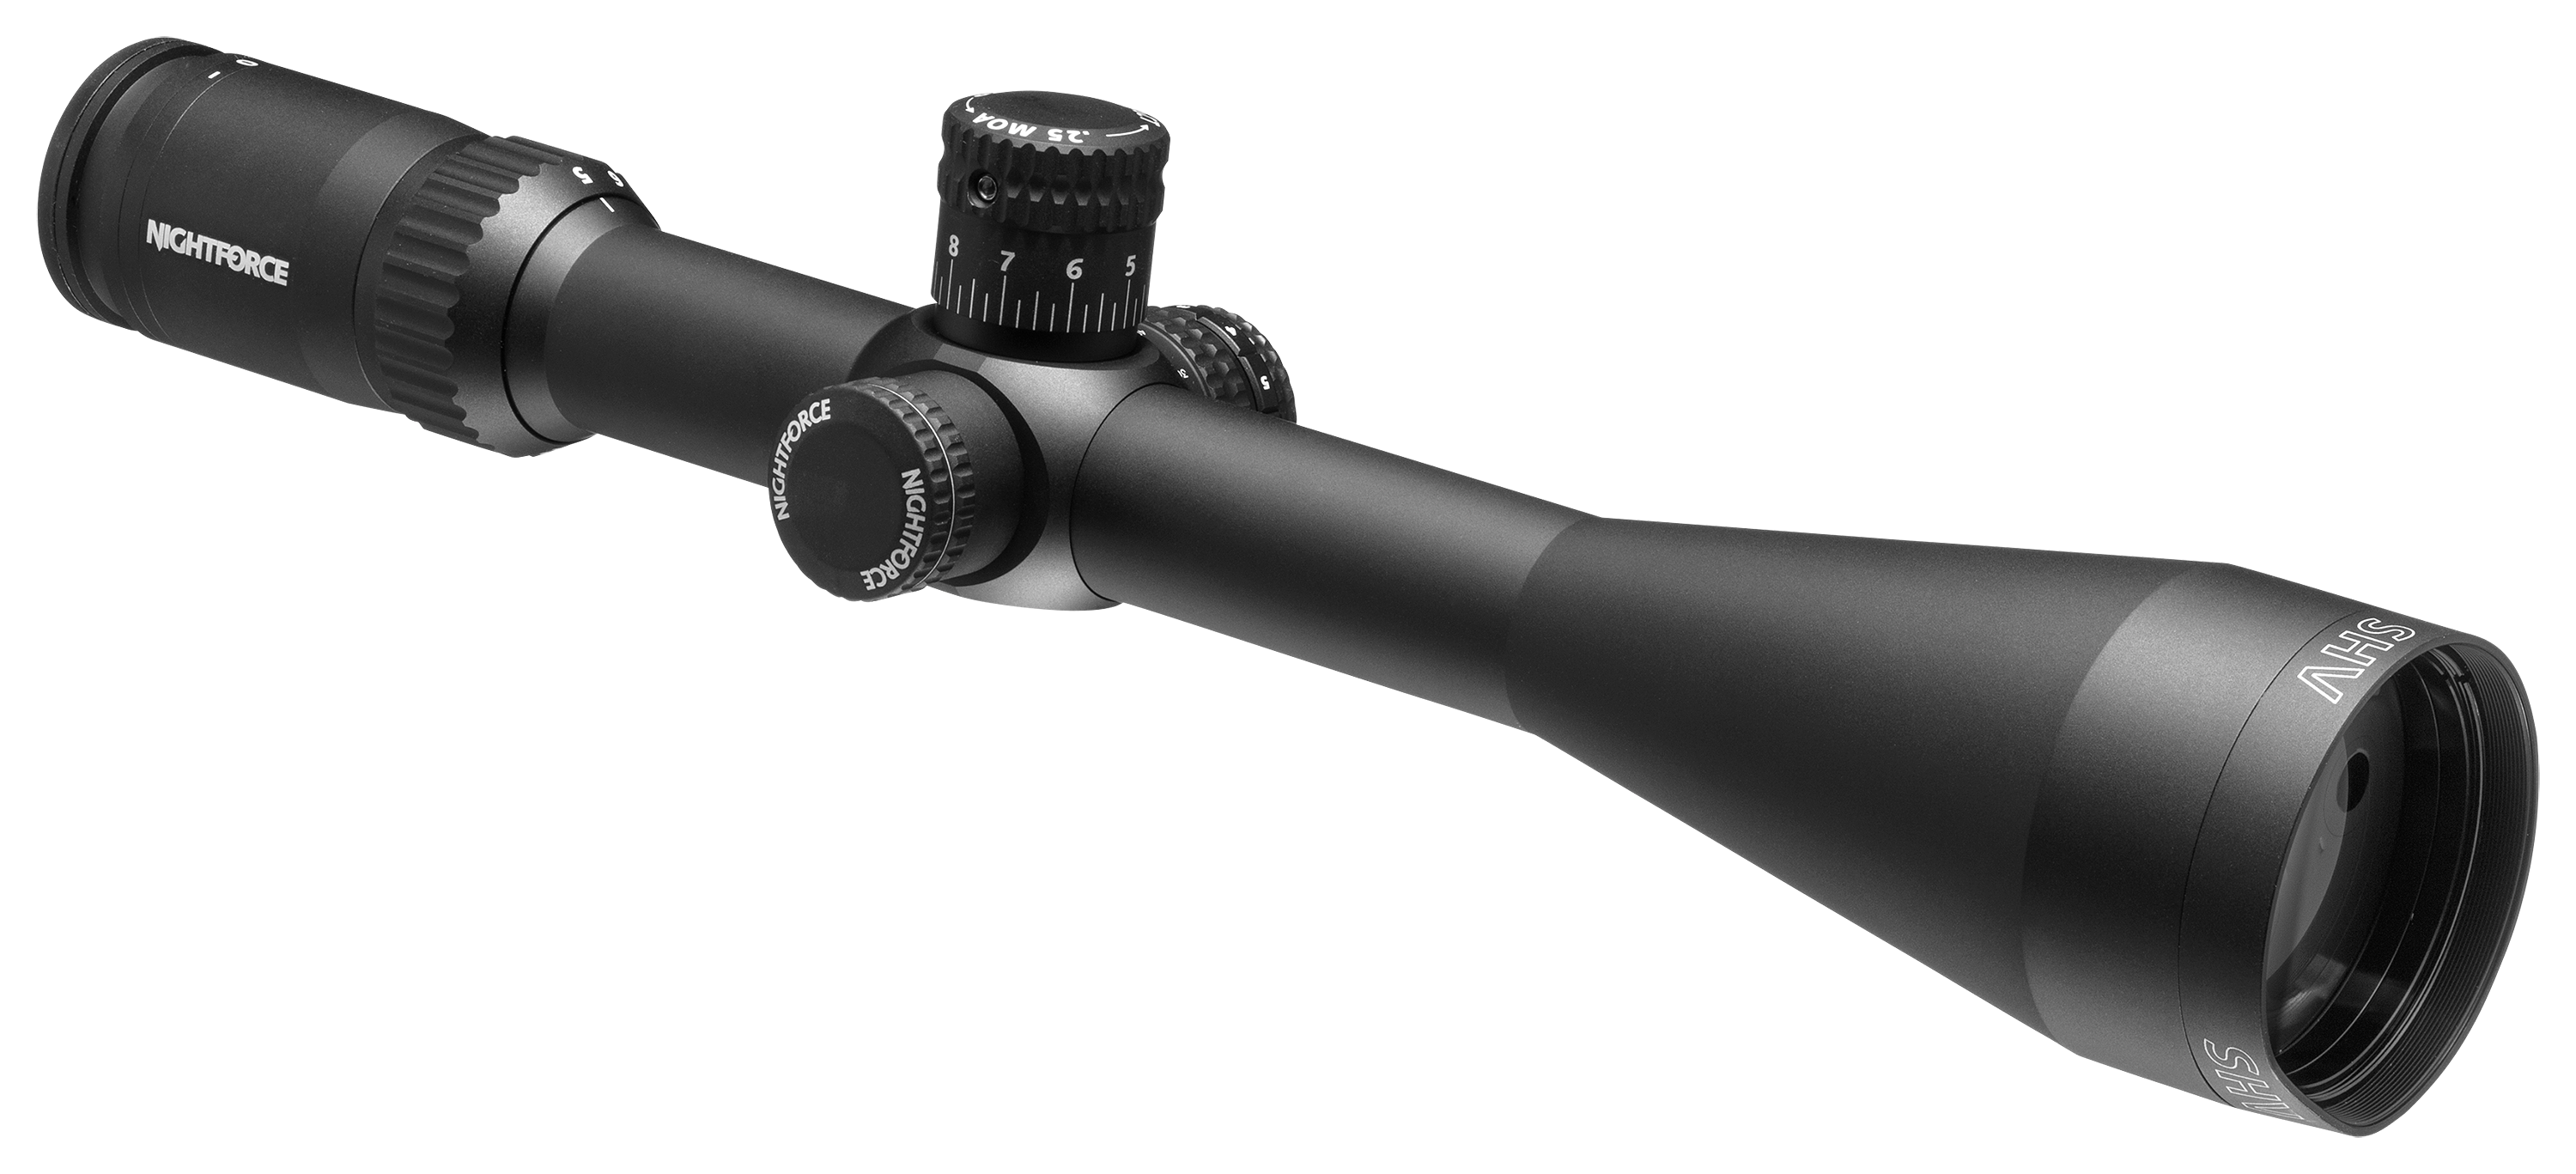 Nightforce Optics SHV Rifle Scope - 5x20-56mm - Illuminated MOAR Reticle